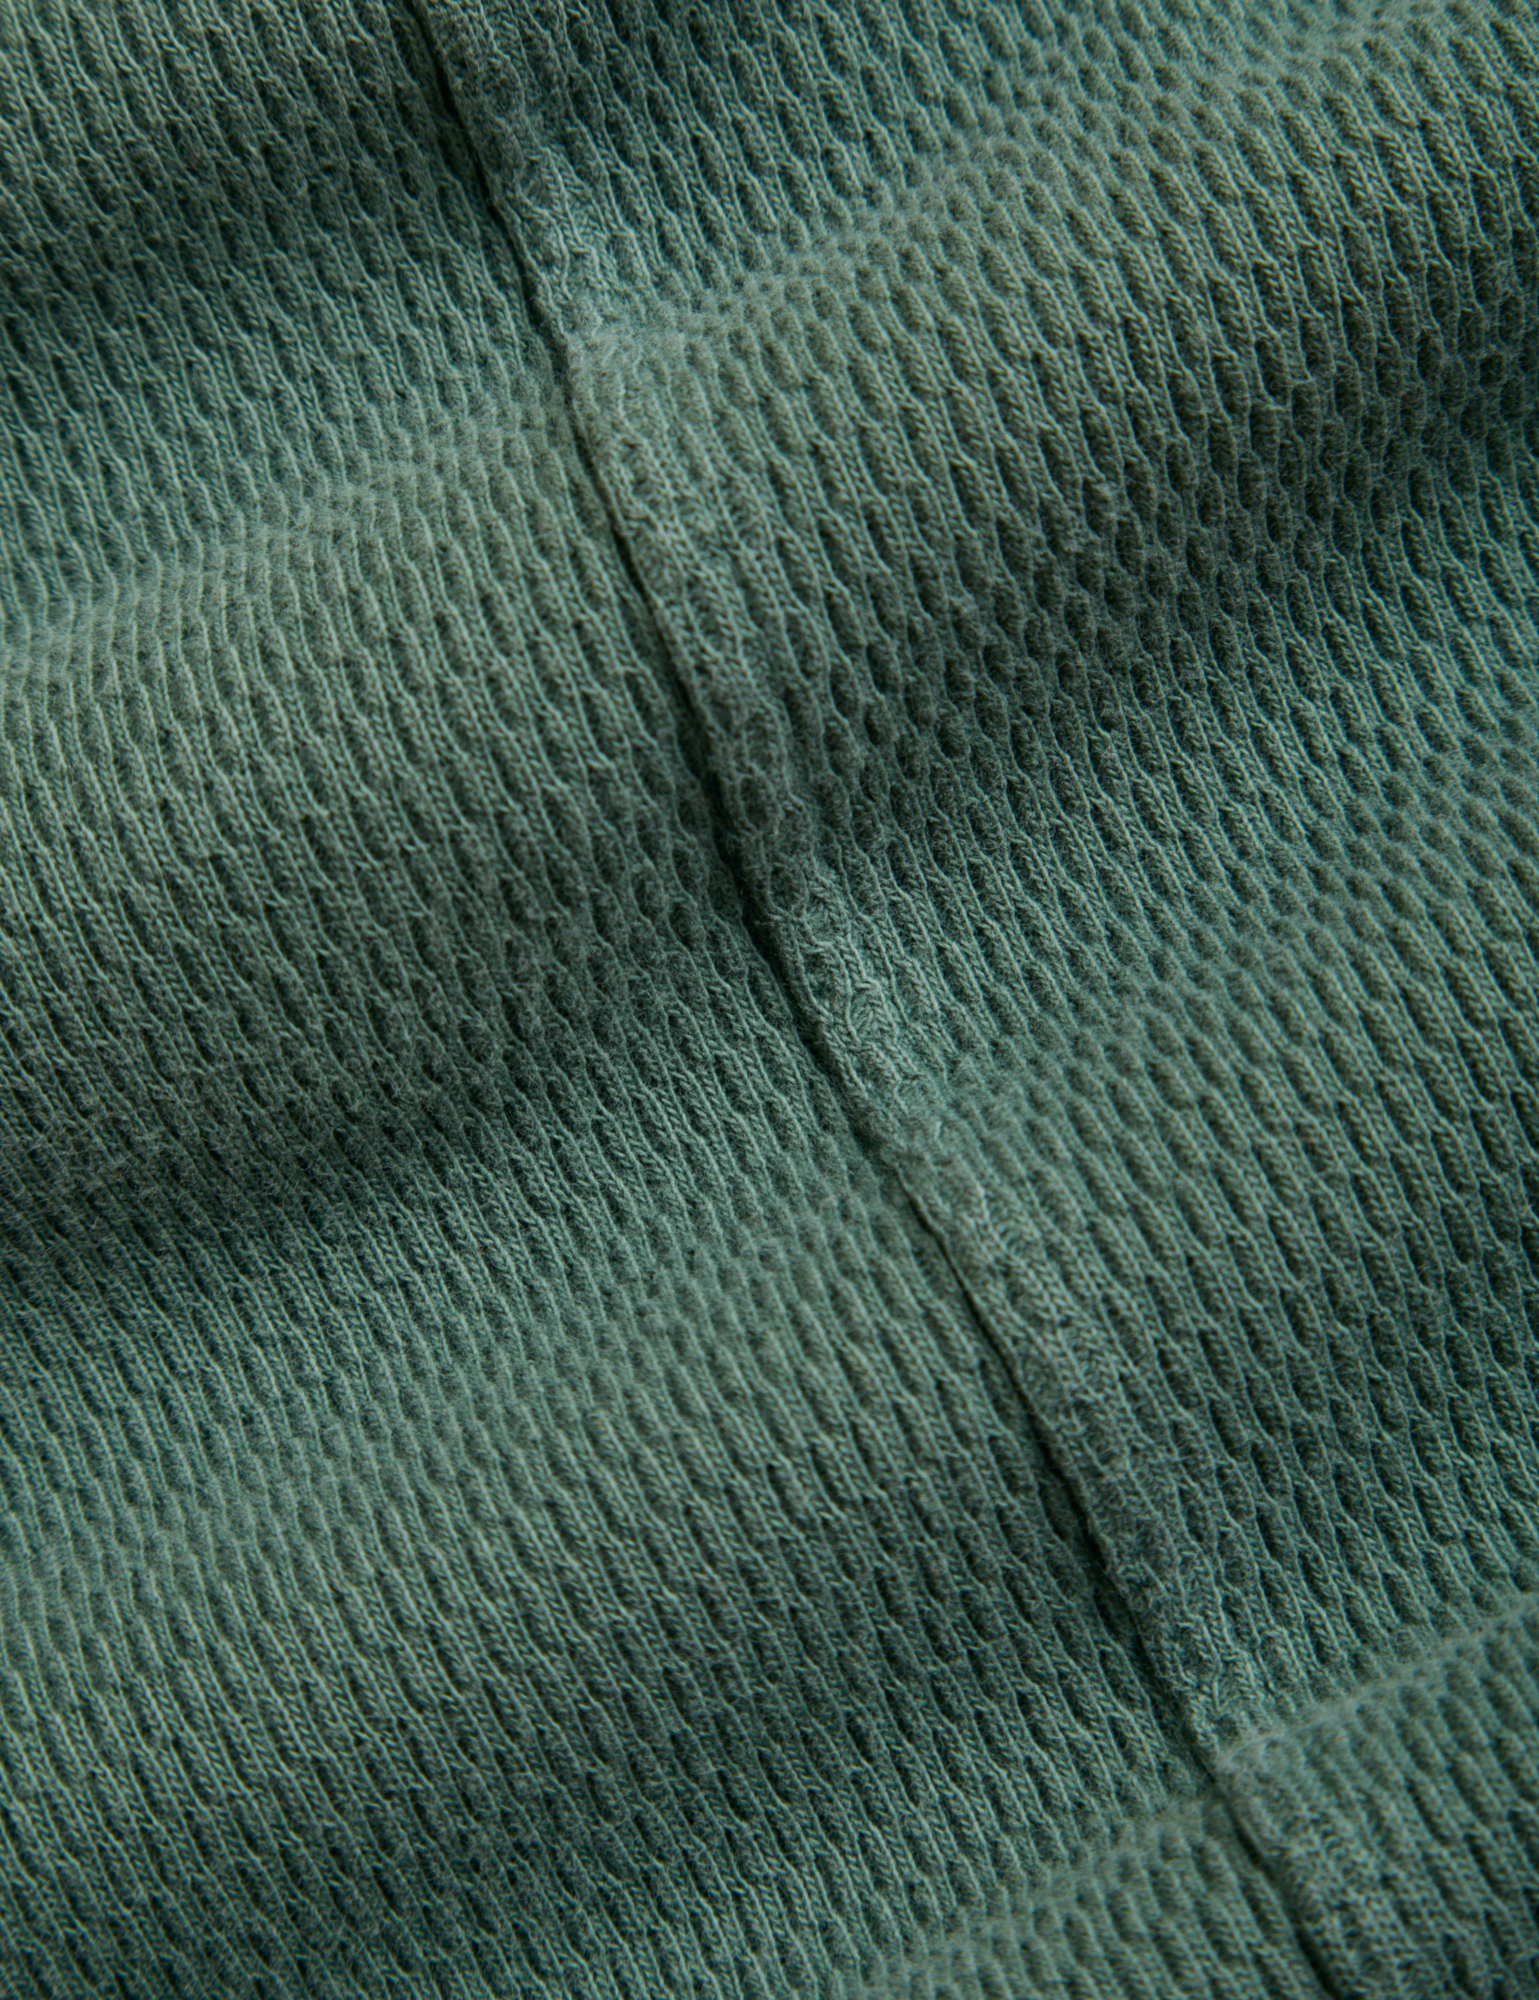 Fisherman Polo in Emerald Green fabric detail